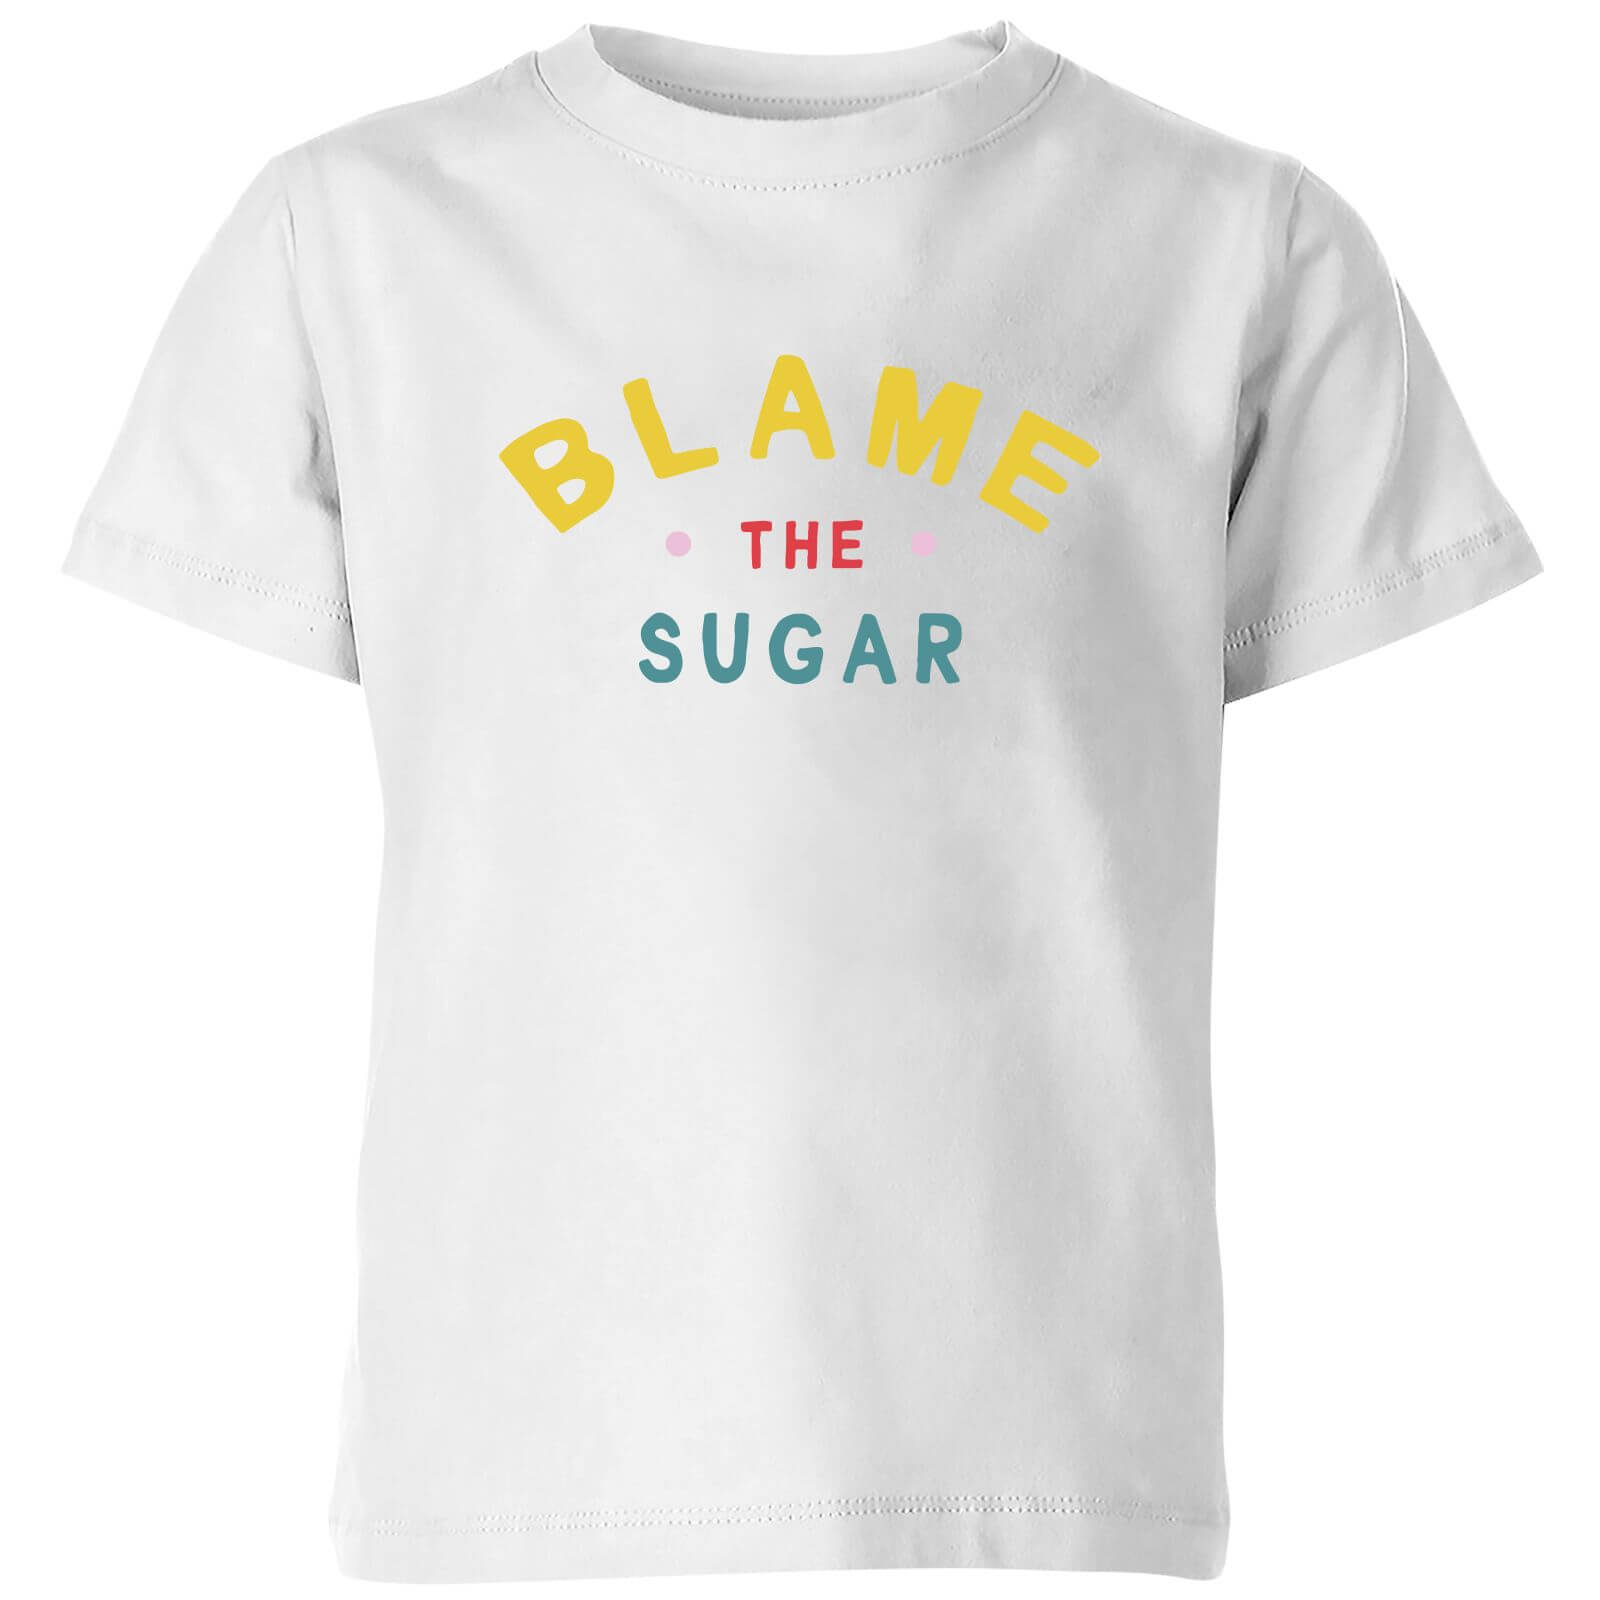 My Little Rascal Blame The Sugar Kids' T-Shirt - White - 3-4 Years - White